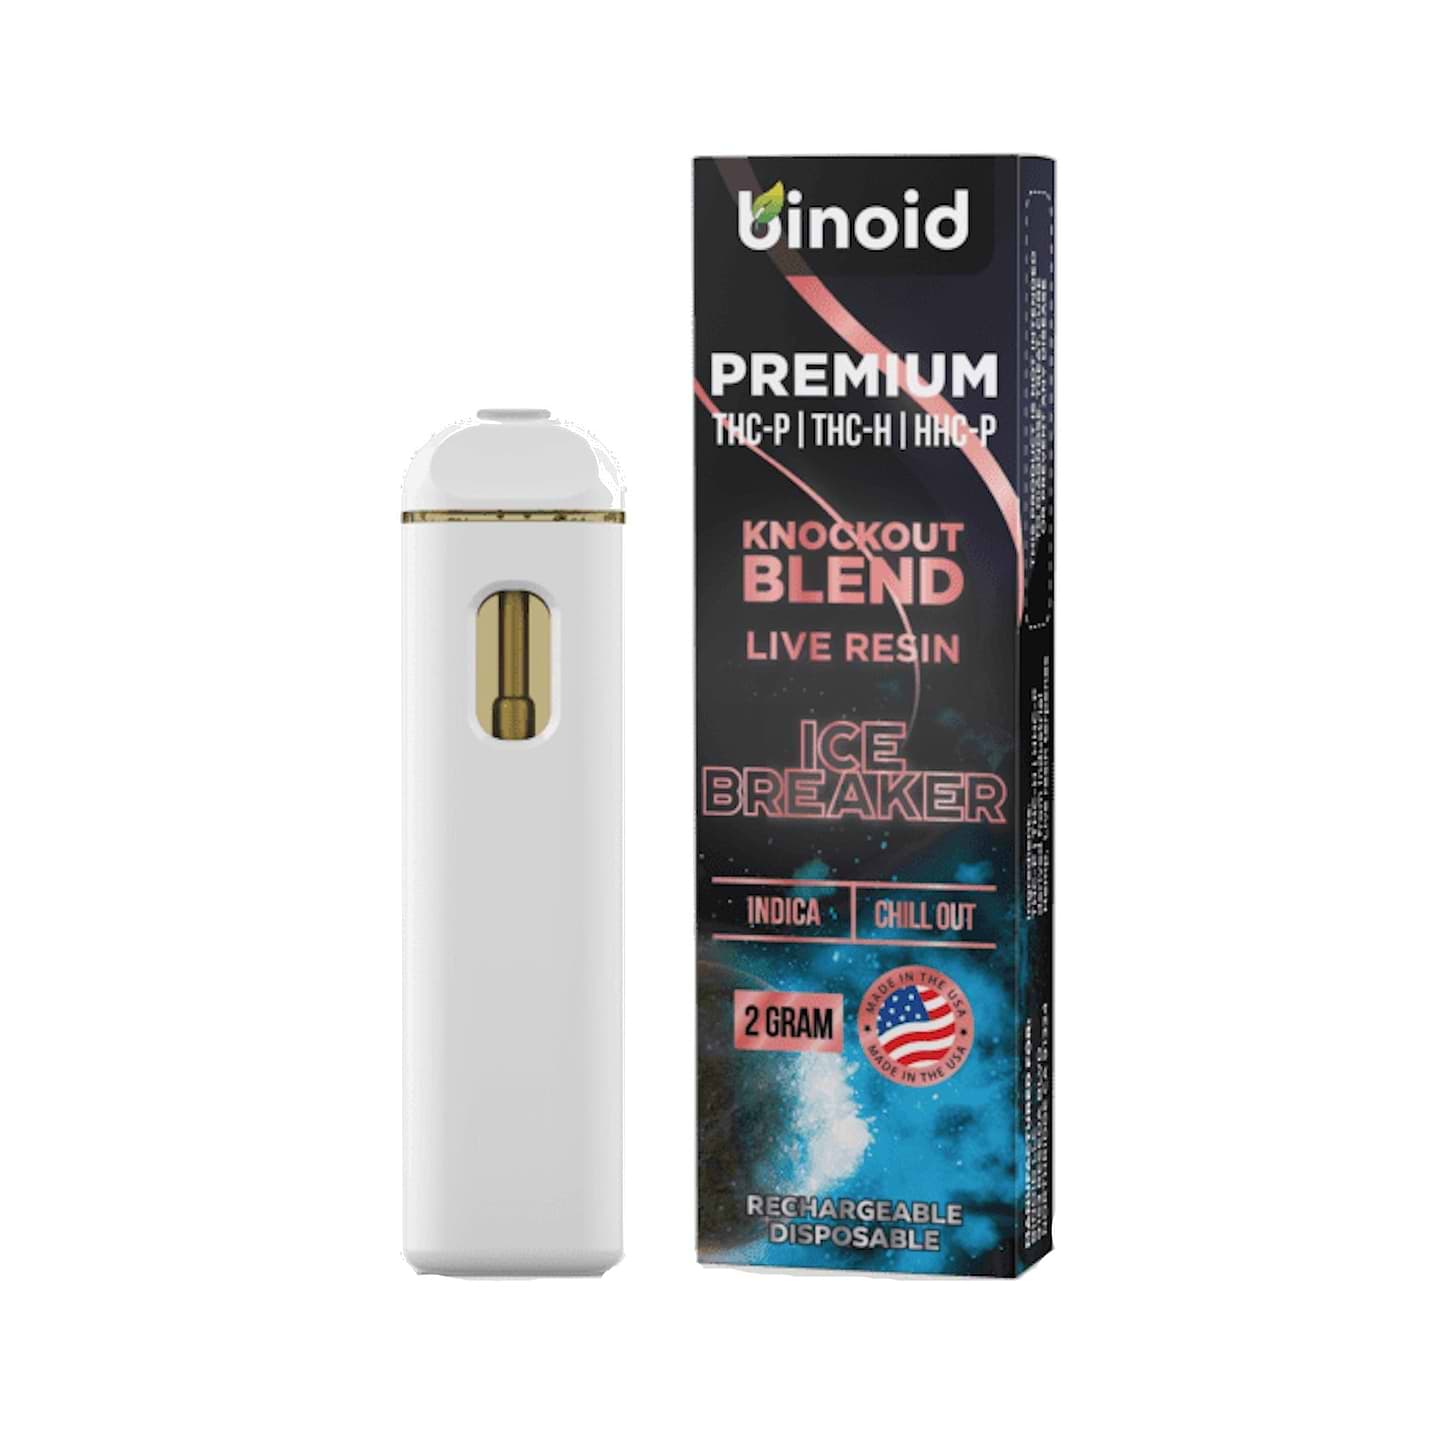 Binoid Knockout Blend Vaporizer - 2000mg